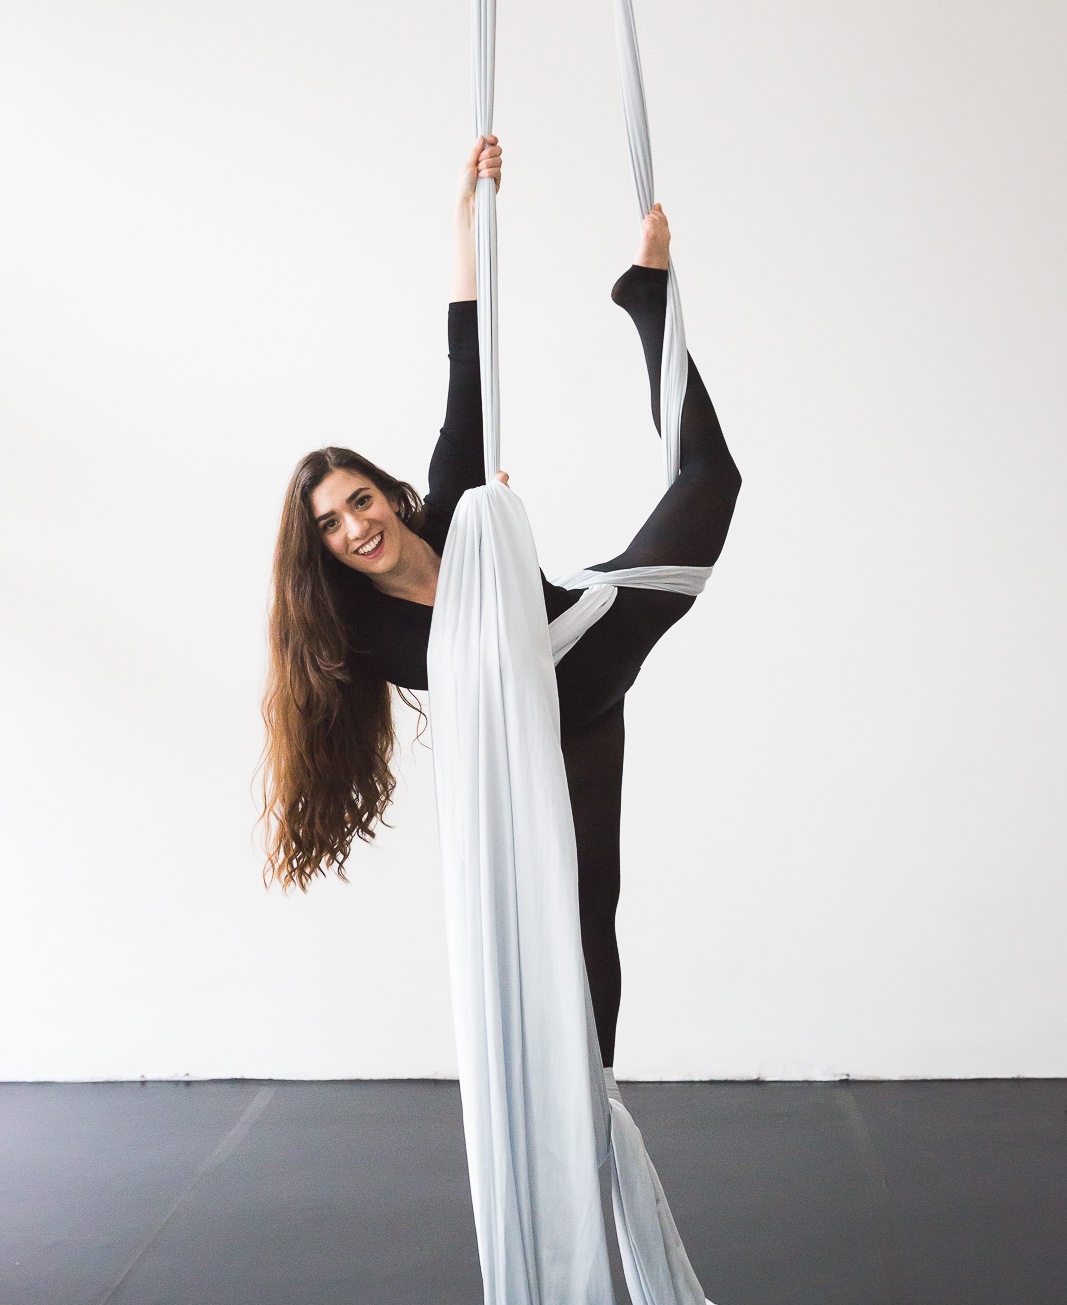 Sport Update | Aerial Silk Dance, My New Passion